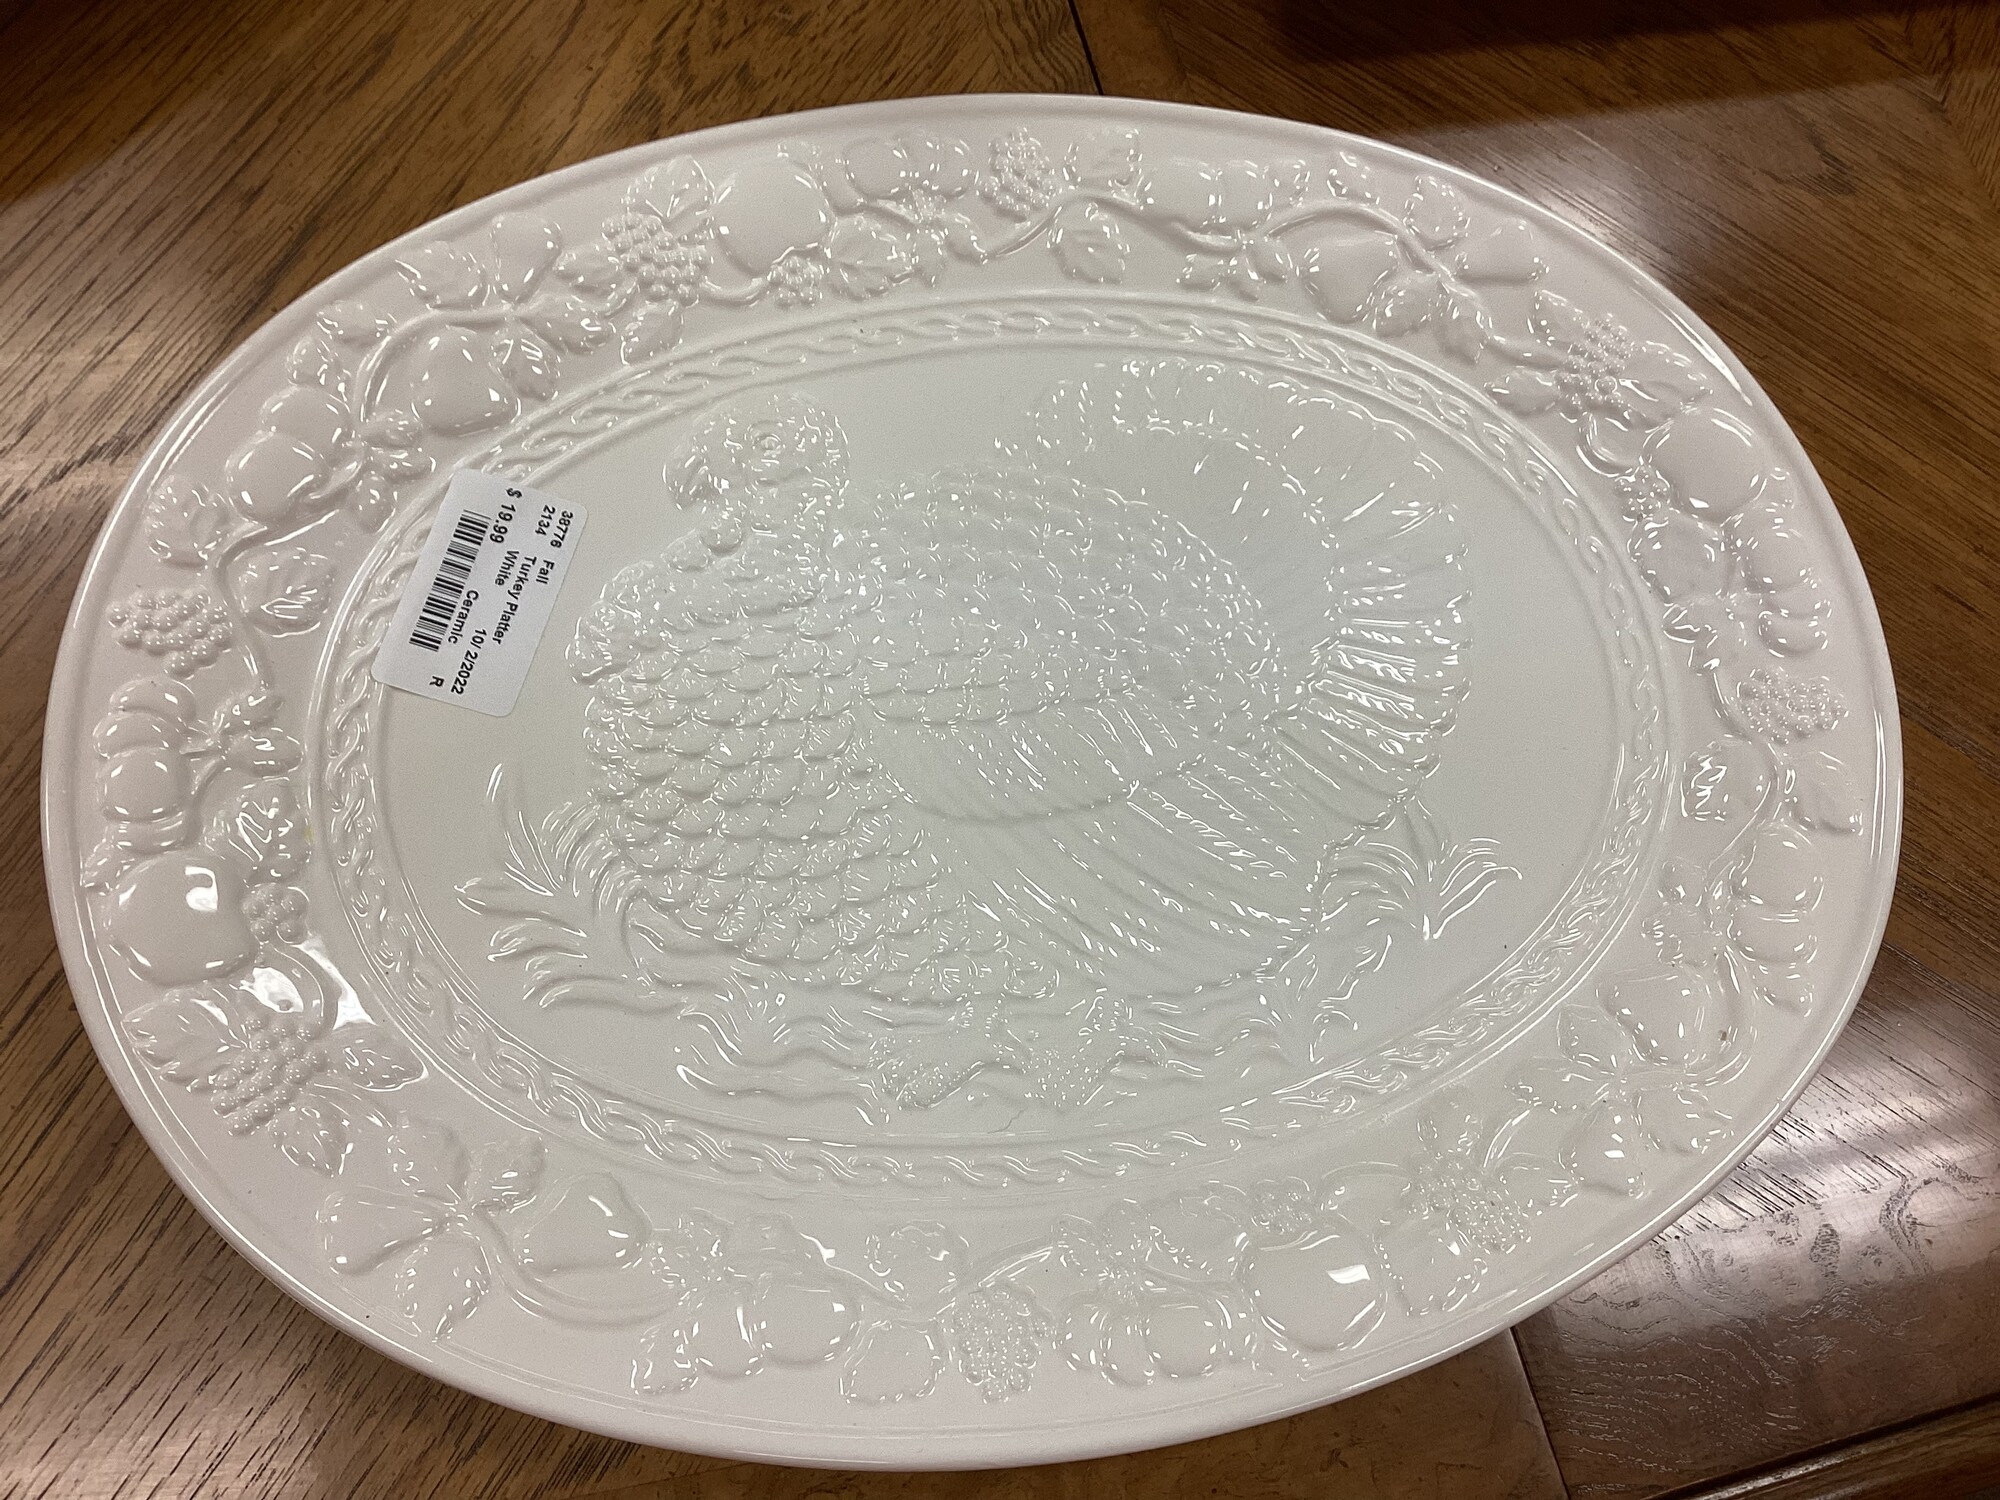 Turkey Platter, White, Ceramic
16 in Oval